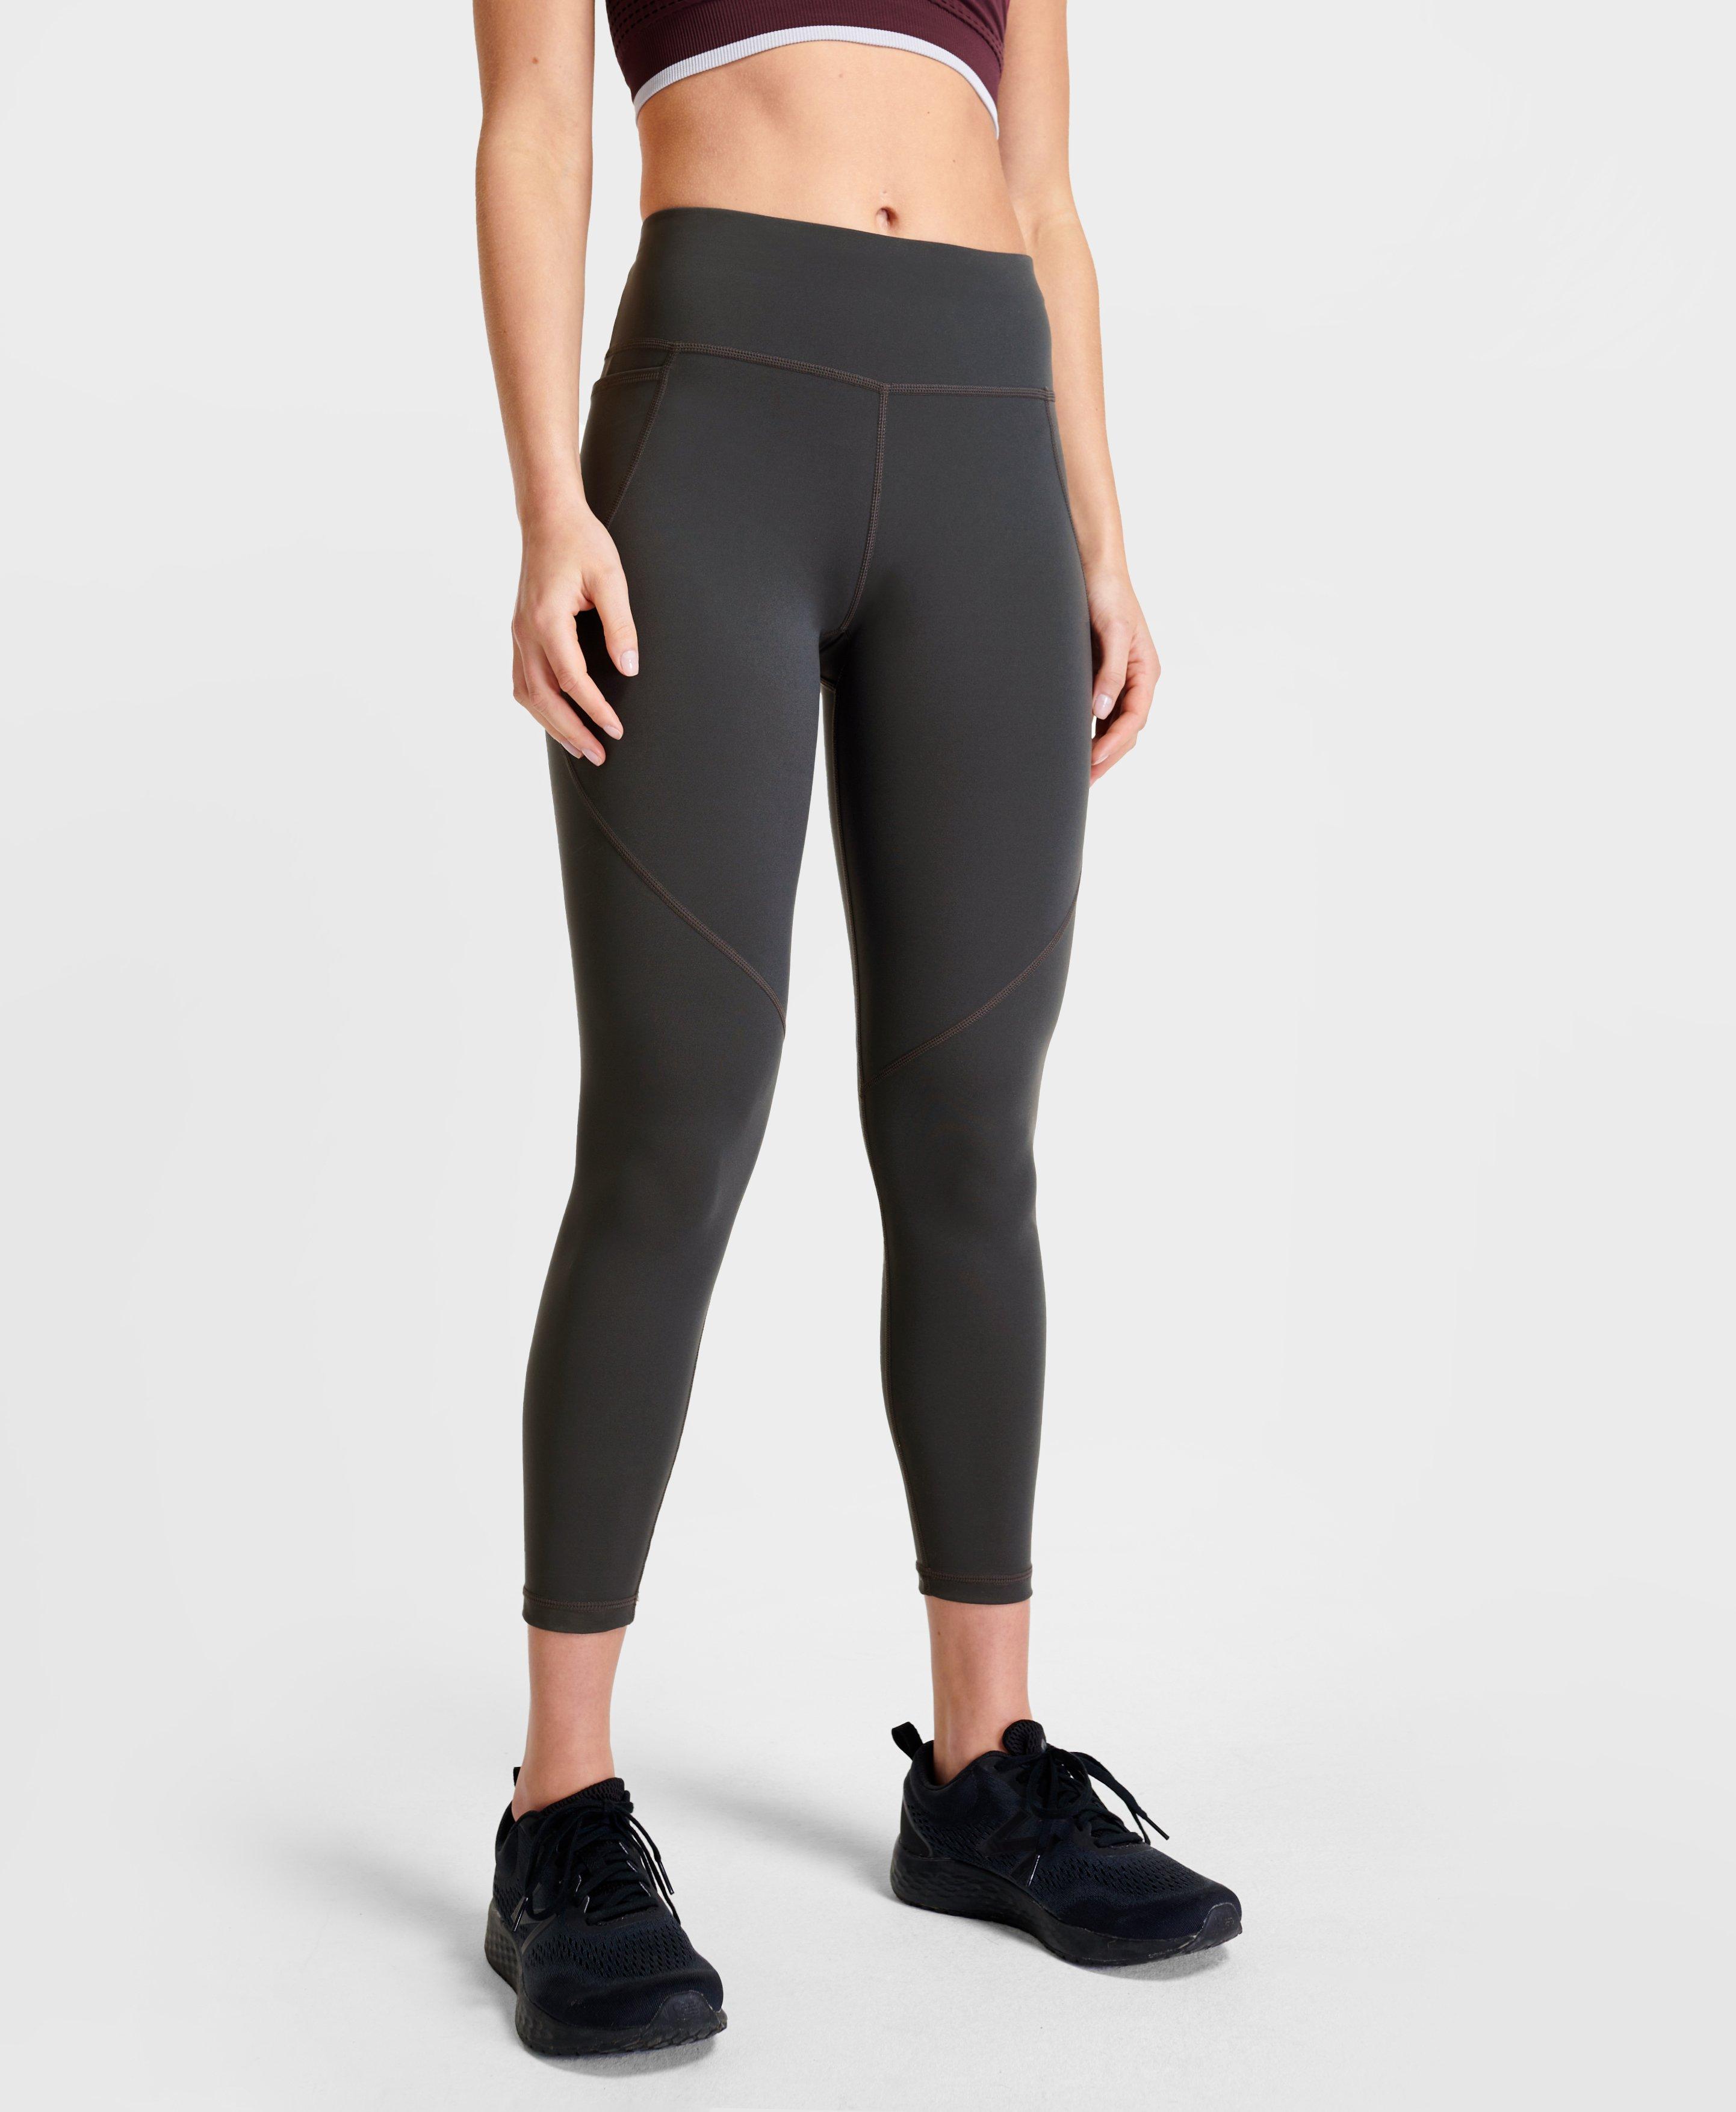 Nike Women's Power Pocket Hyper Tight Training Pants